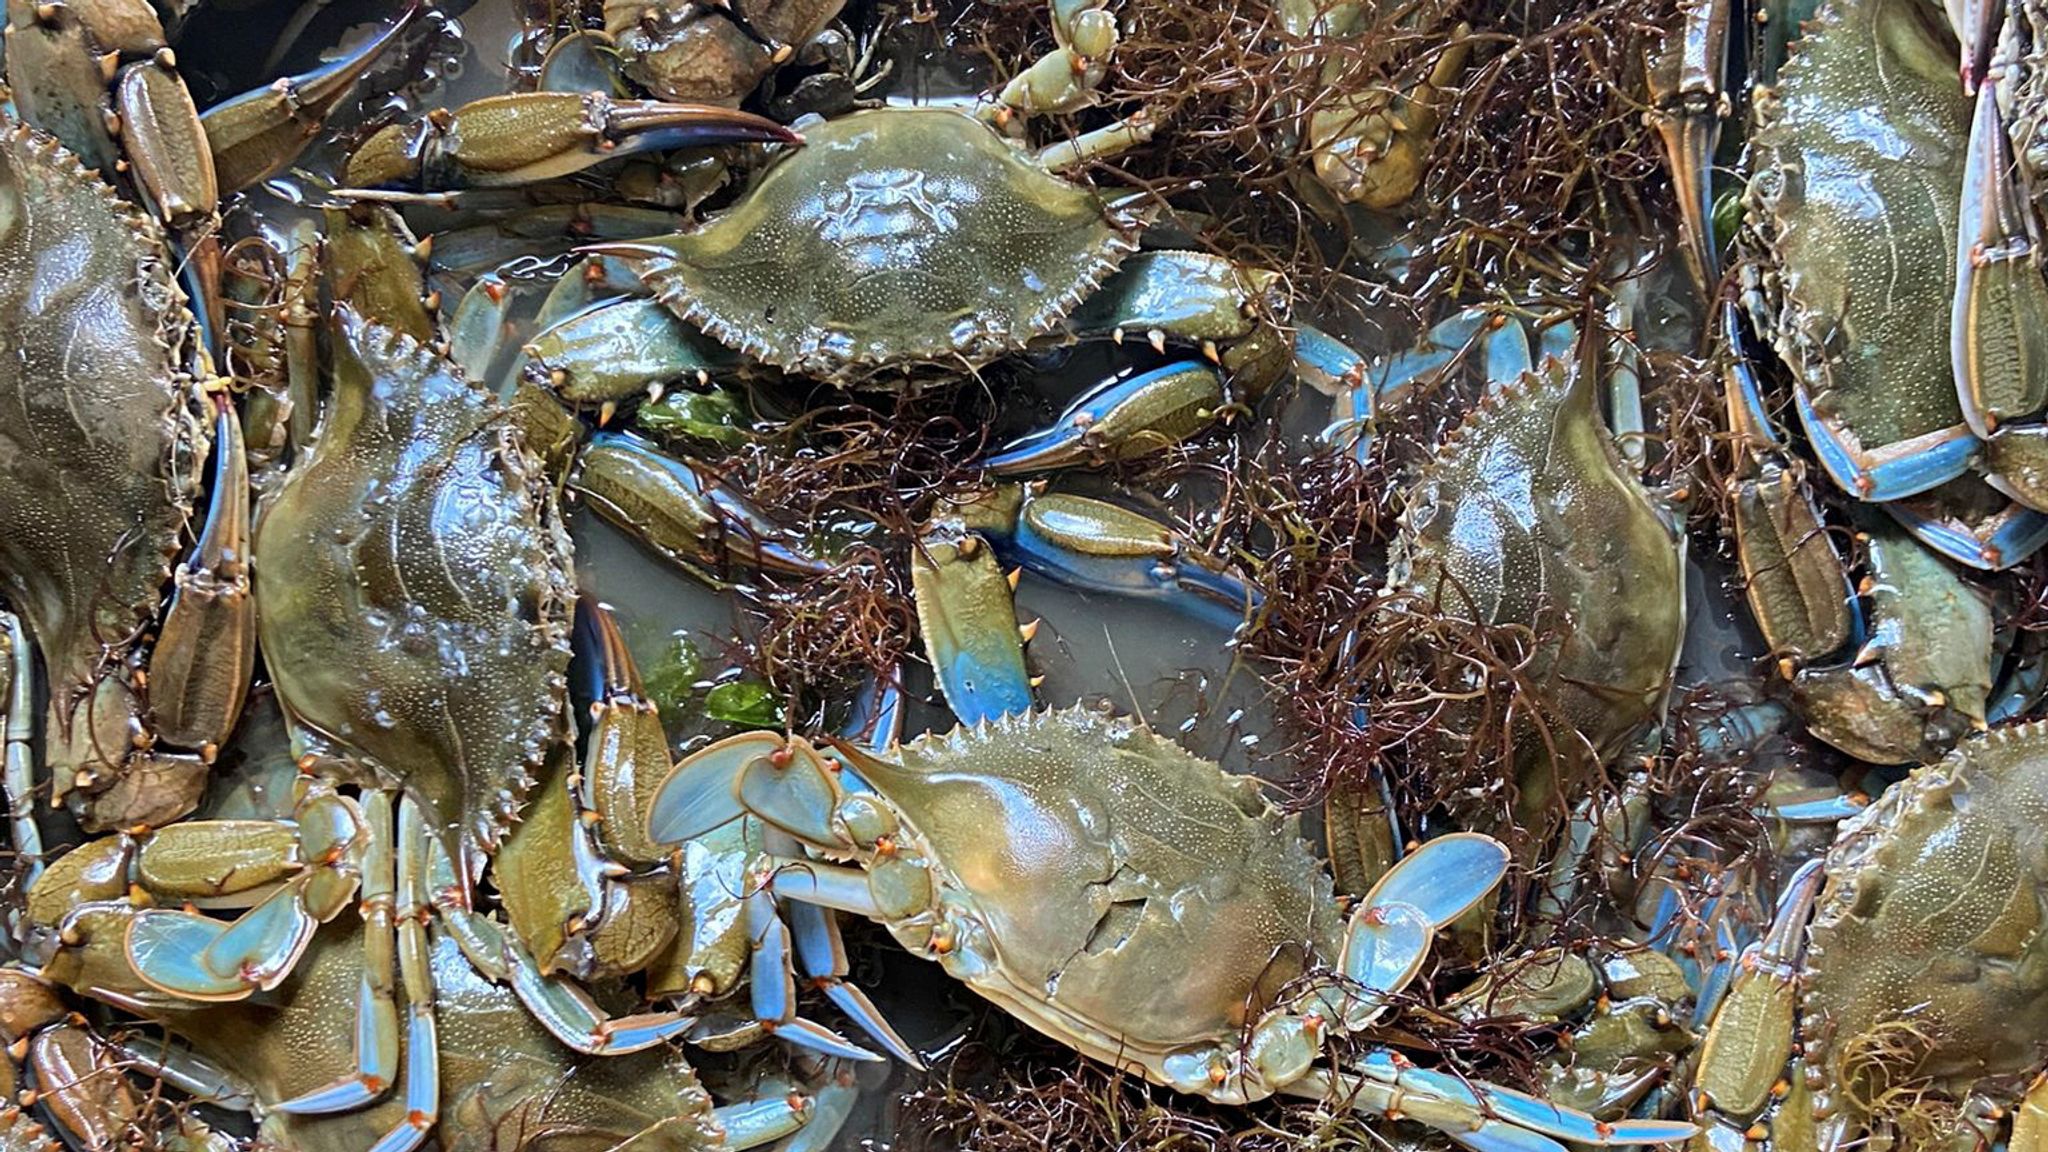  Italy tackles invasion of blue crabs by eating them facebook italiane originali ricette italiane 